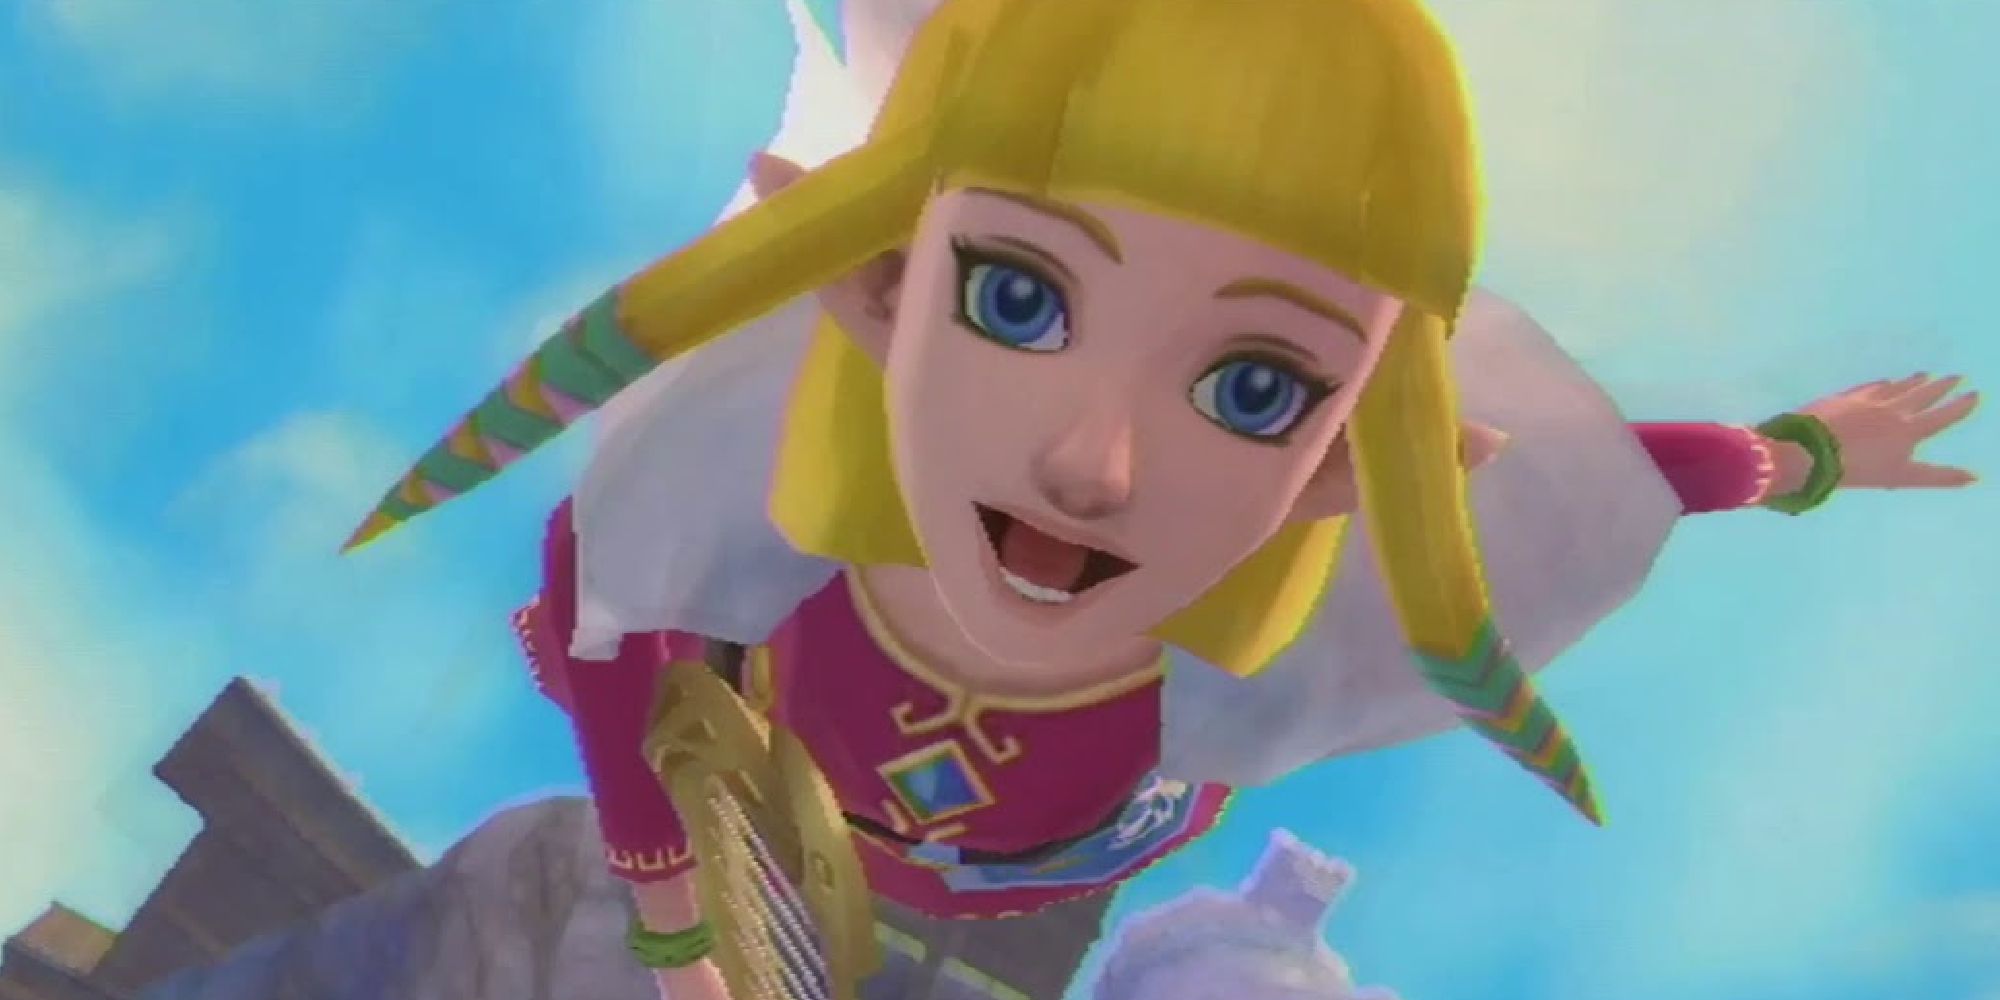 Zelda falling from Skyloft while holding her lyre in Skyward Sword